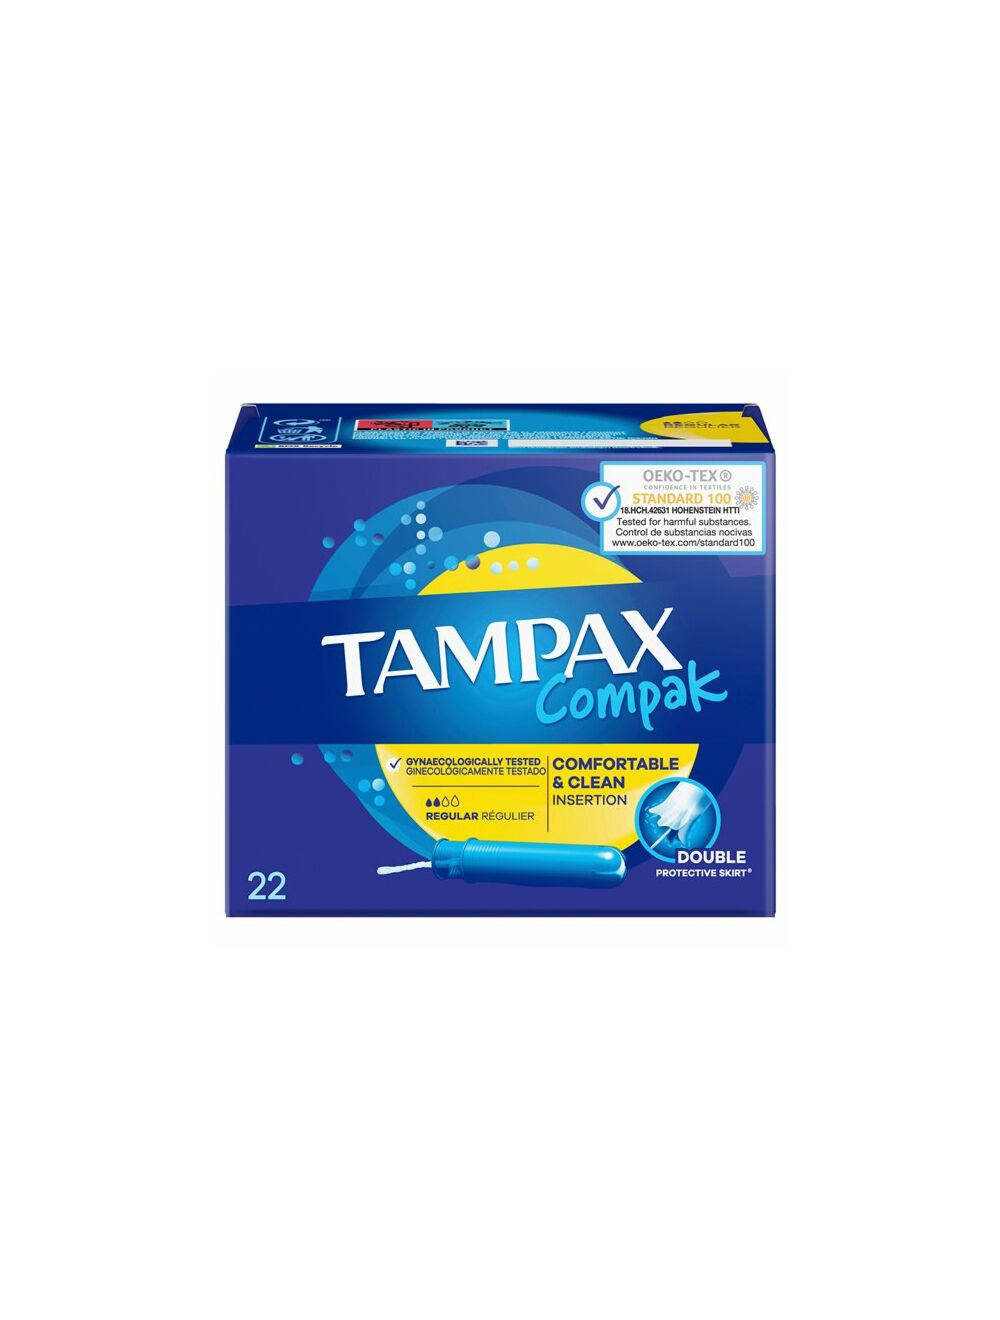 Tampax Compak Regular 22 Stk jetzt bestellen | Coop Vitality